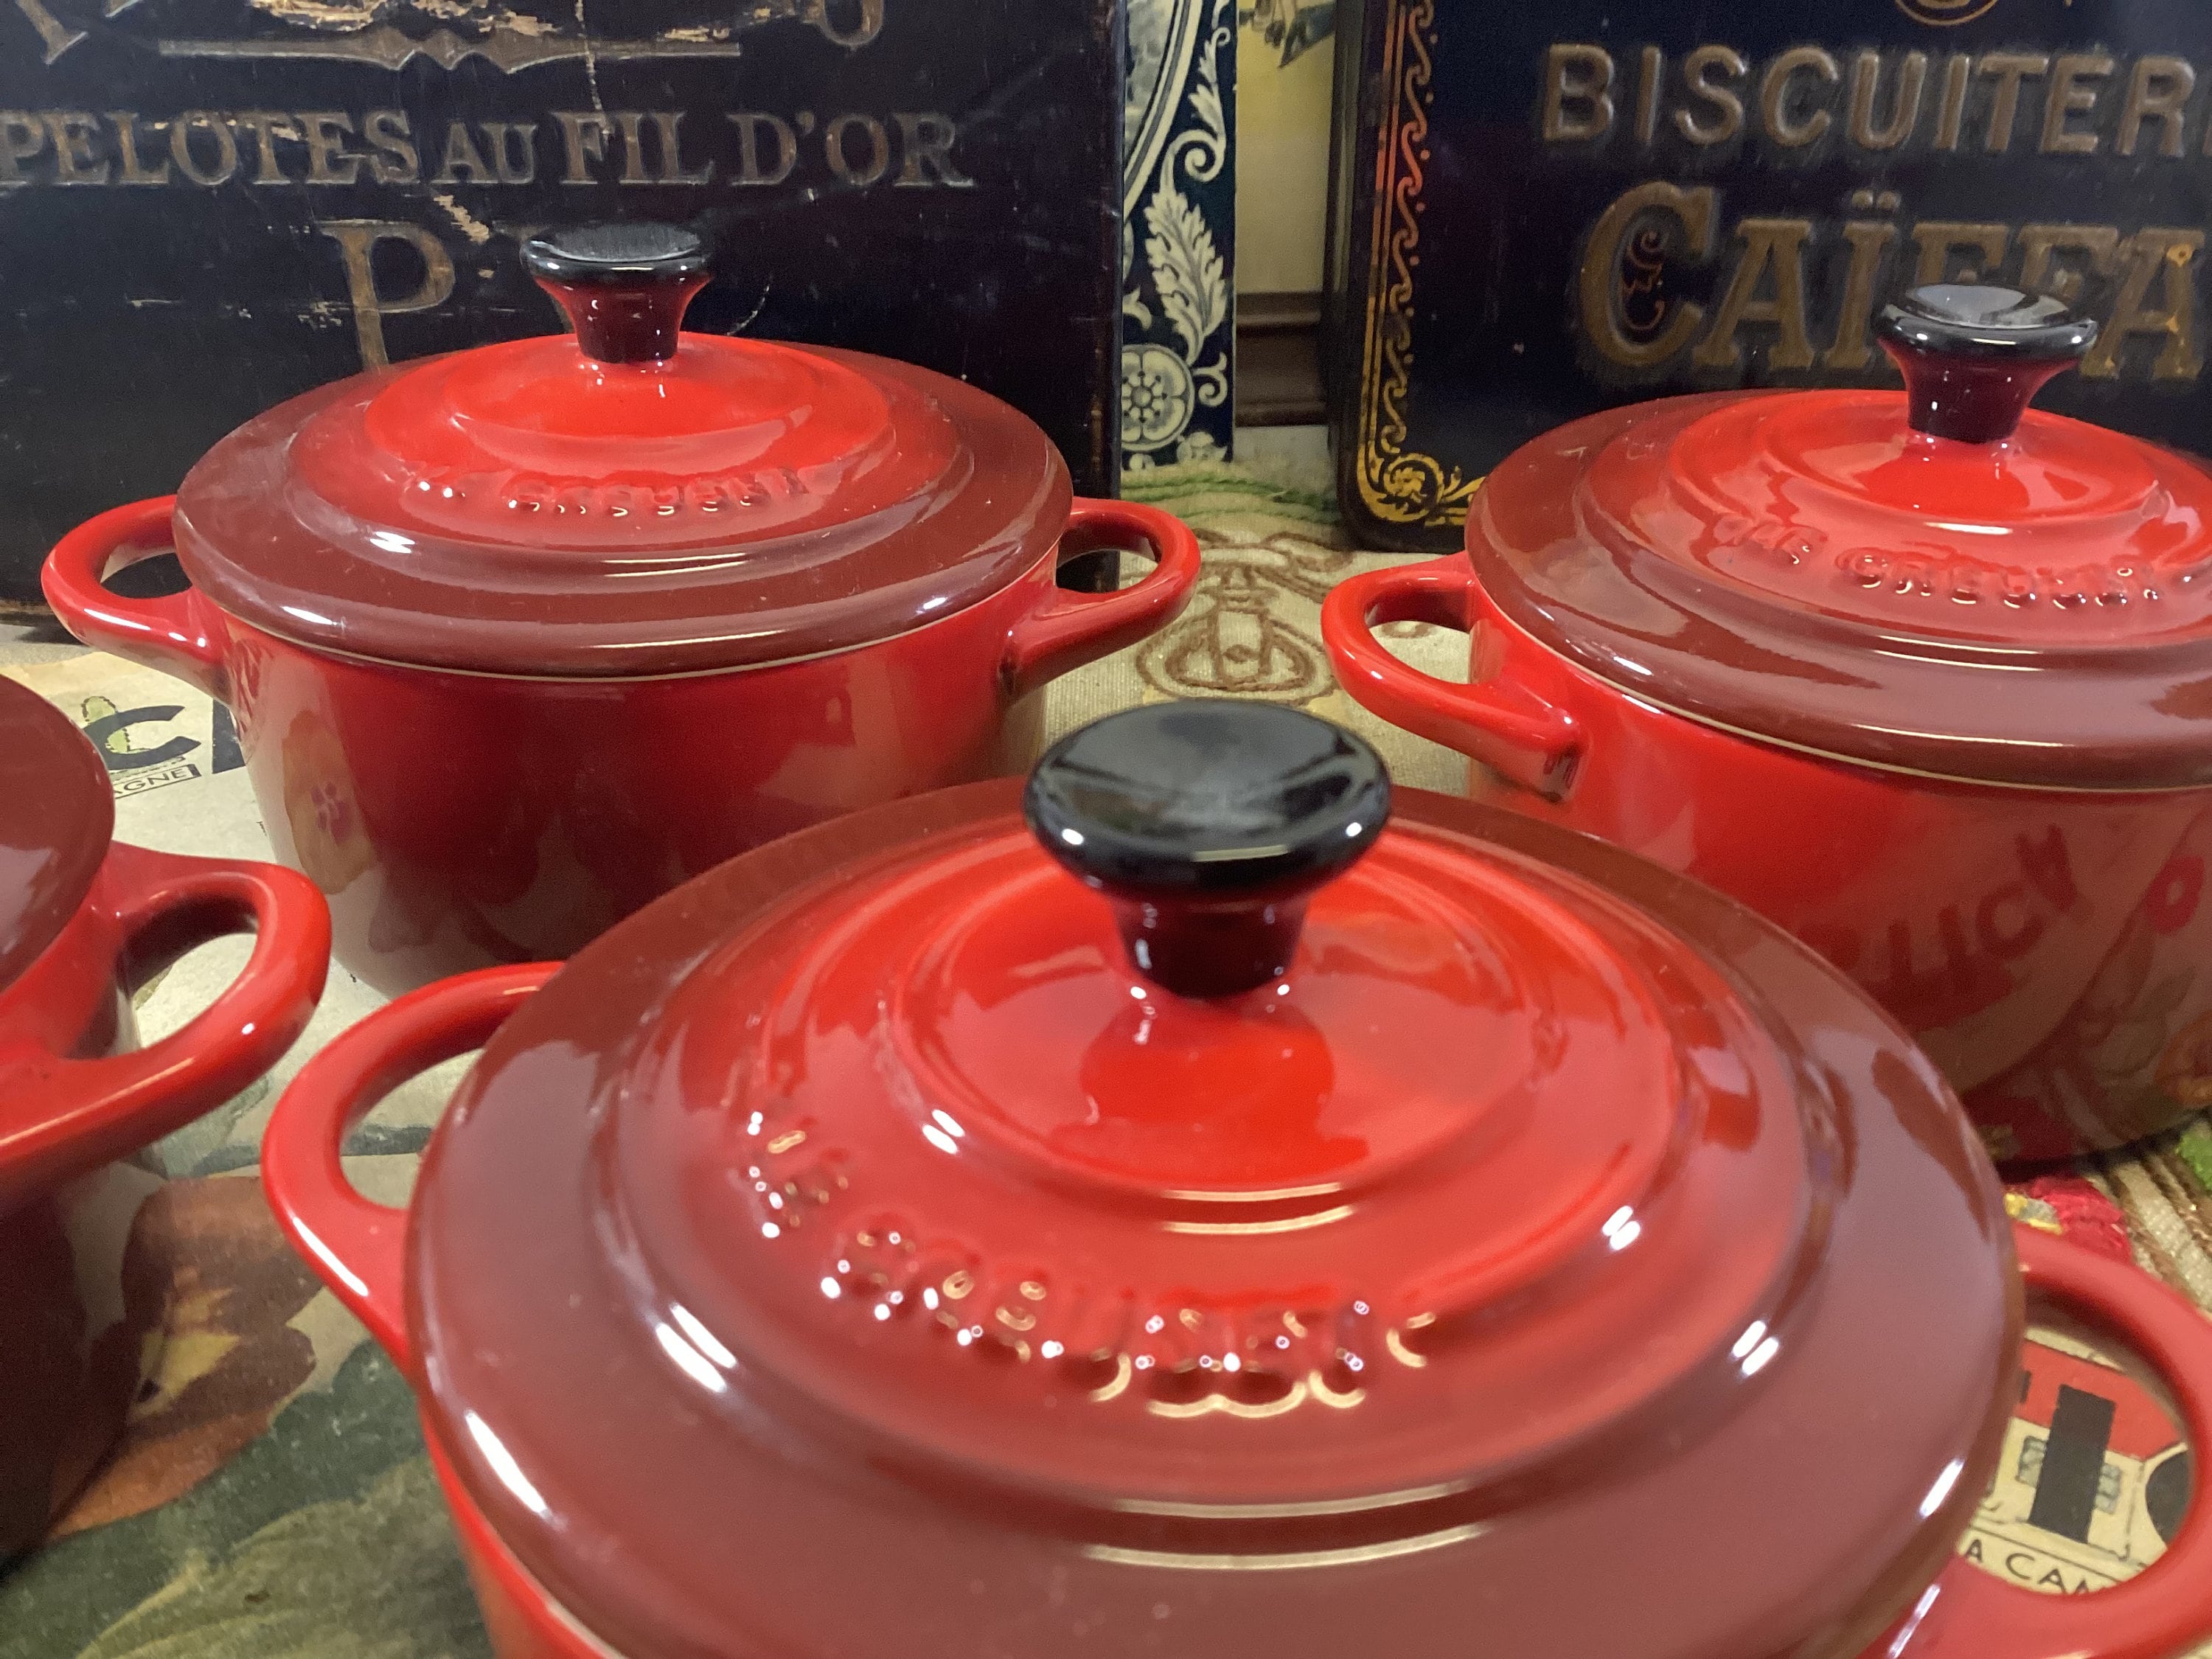 Le Creuset Red Ceramic Deep Dish Pie Pan-food Photography Props 